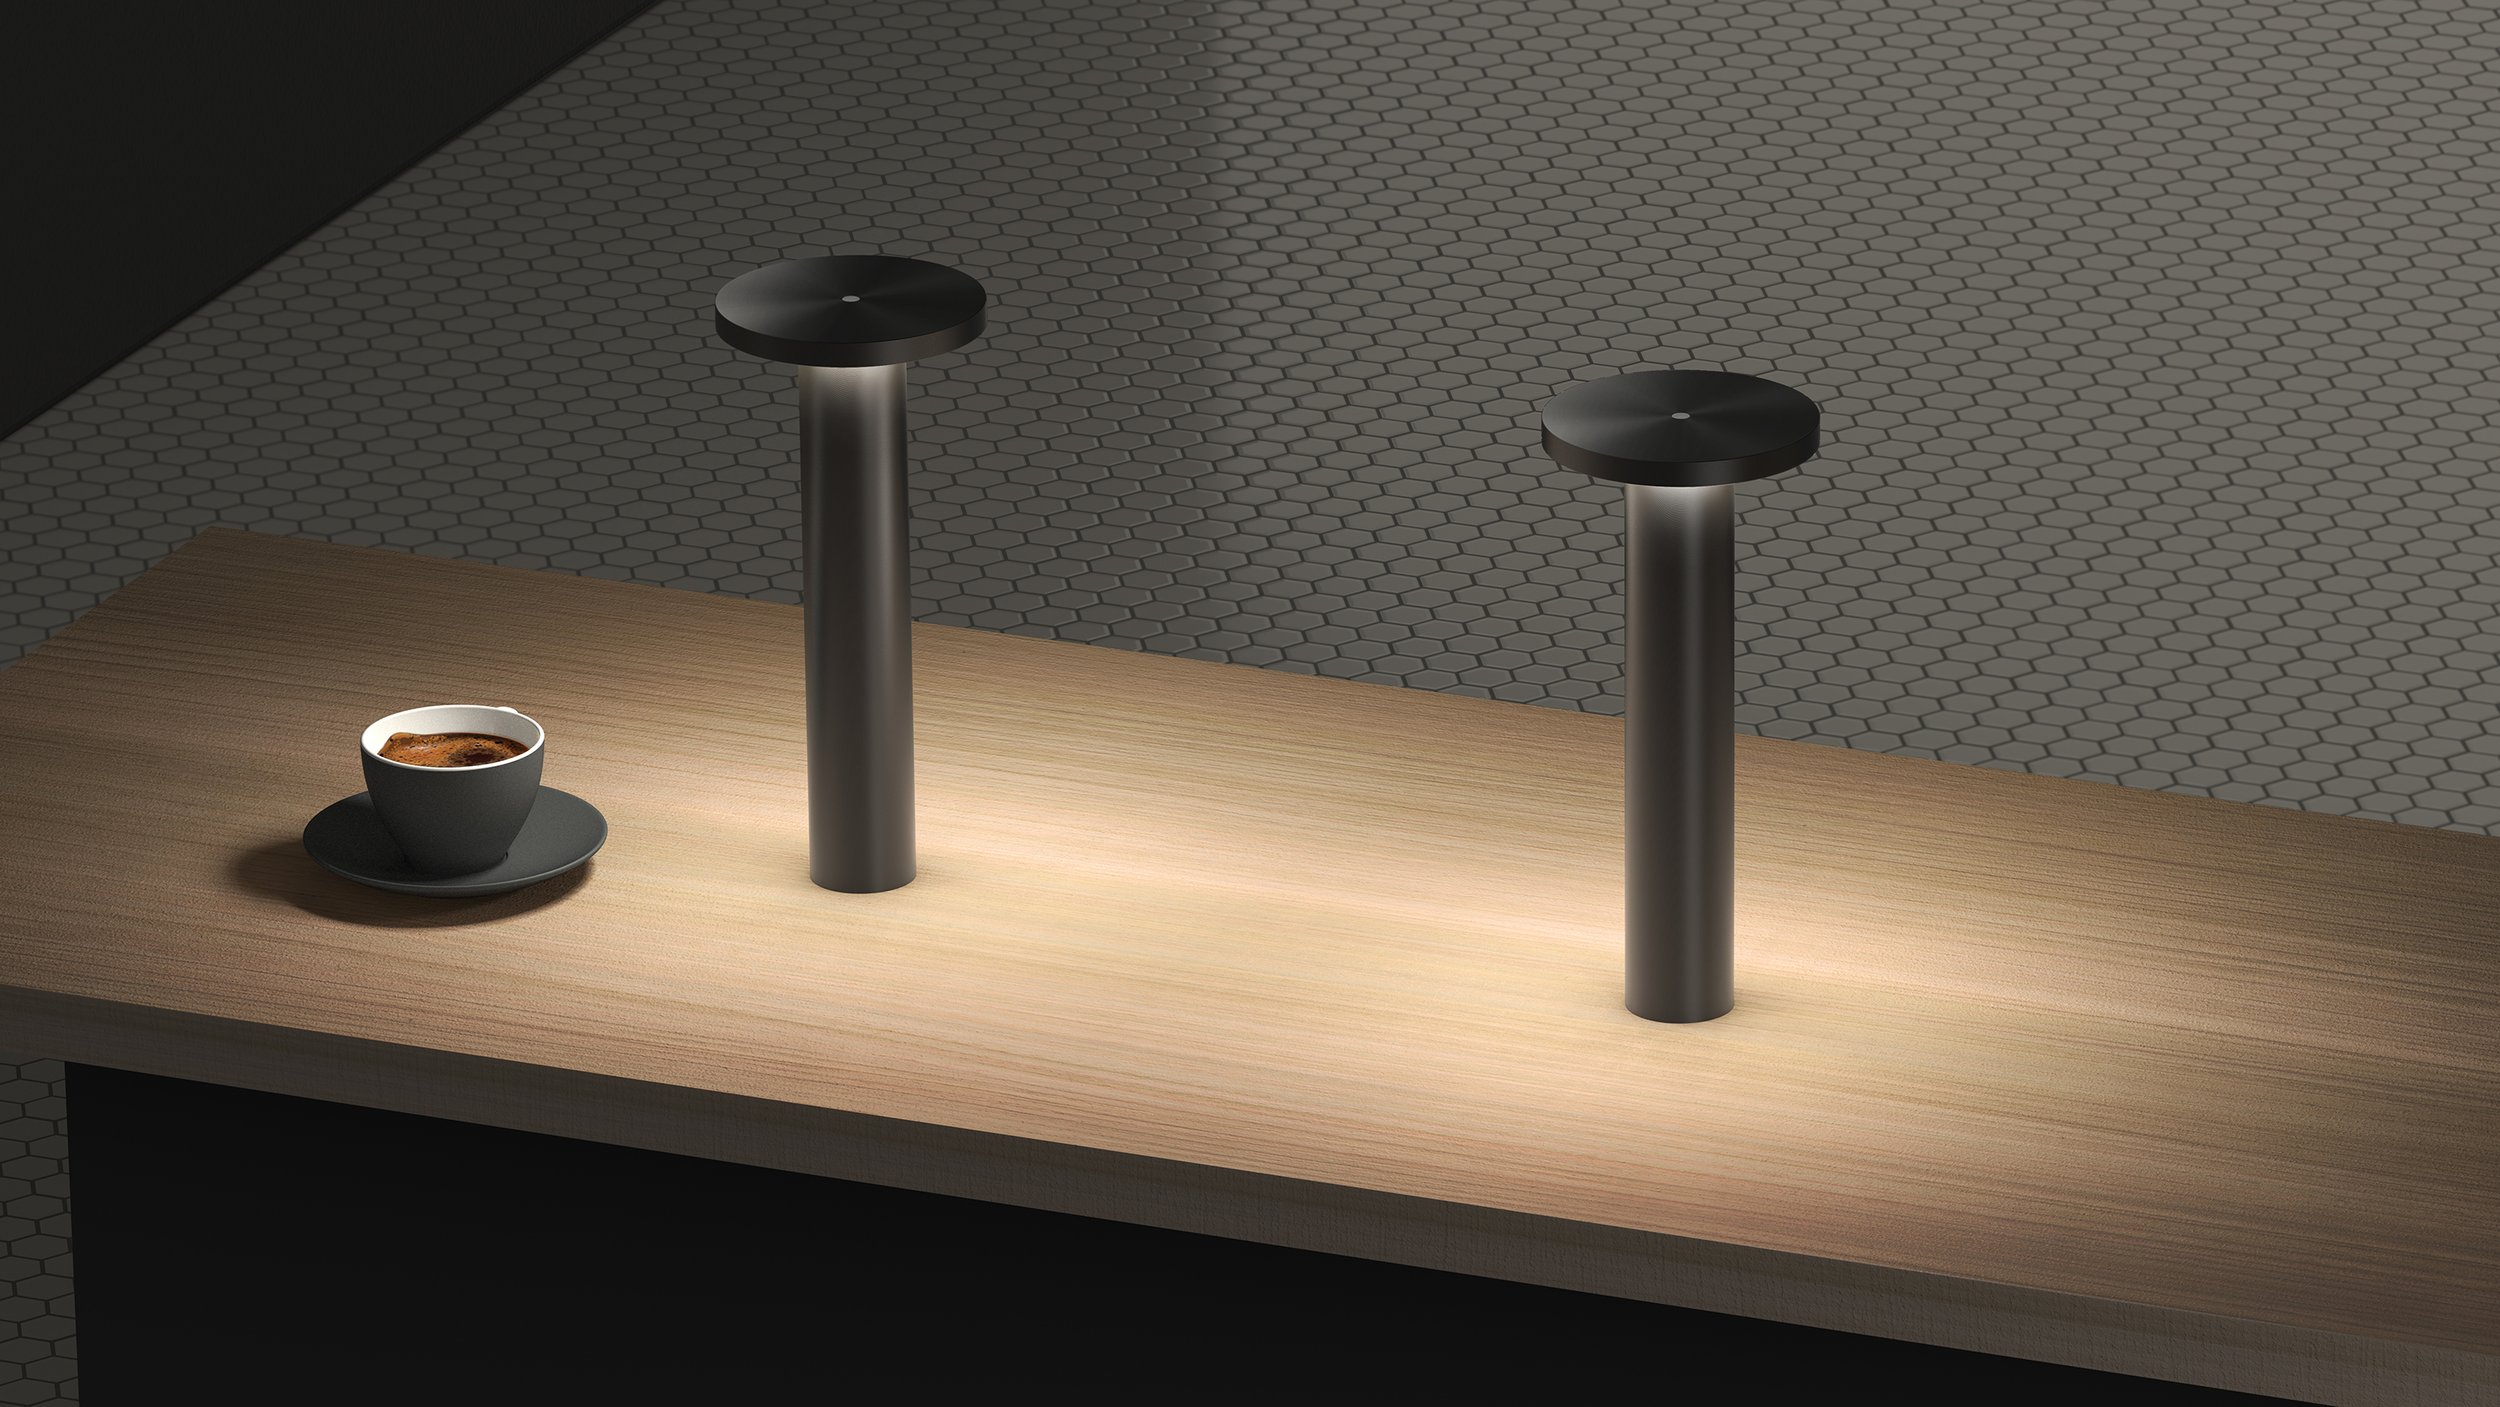 10 Pablo Designs - Luci Table - Environmental Image - Black - Espresso Counter_300.jpg